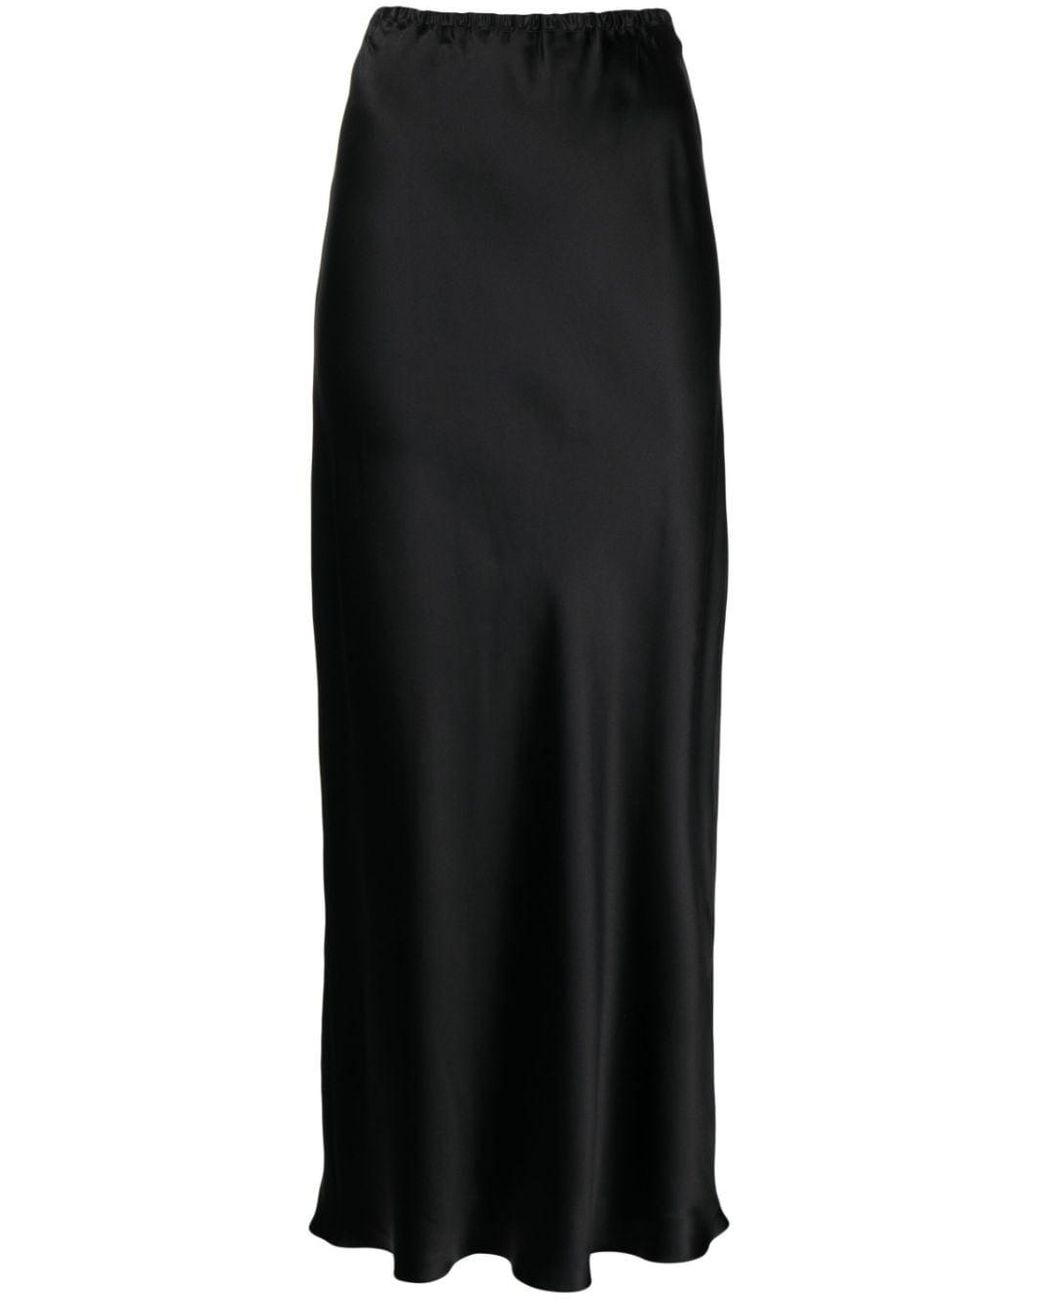 Gilda & Pearl Aria Silk Maxi Skirt in Black | Lyst